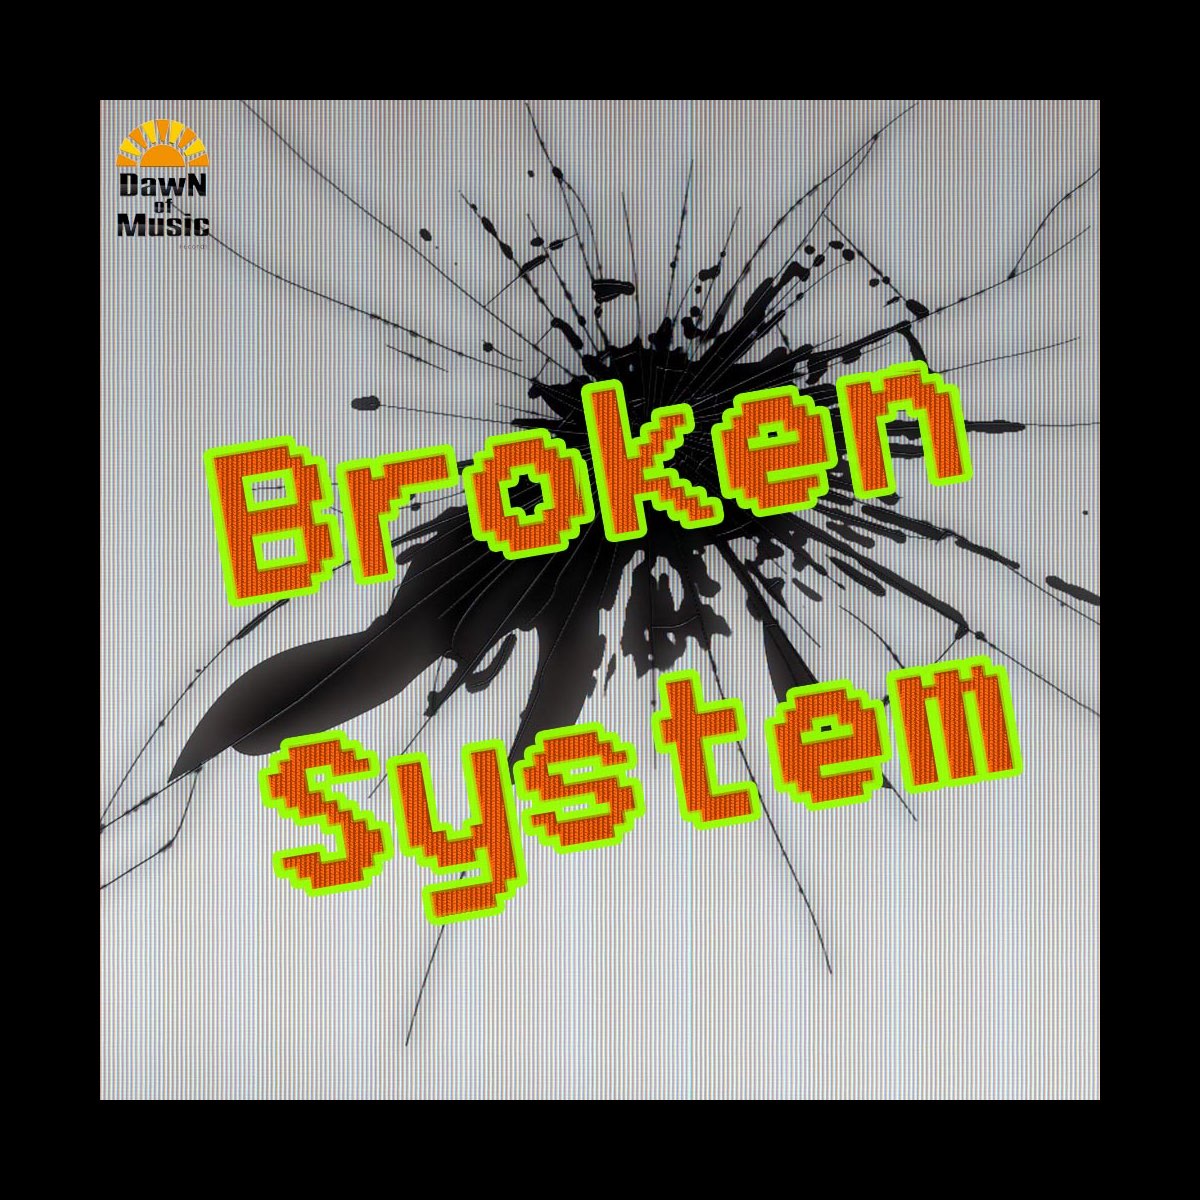 Broken System. Broken System без фона. Broken System Ministry. A'Gun сборник Break the System картинки. Система давн слушать